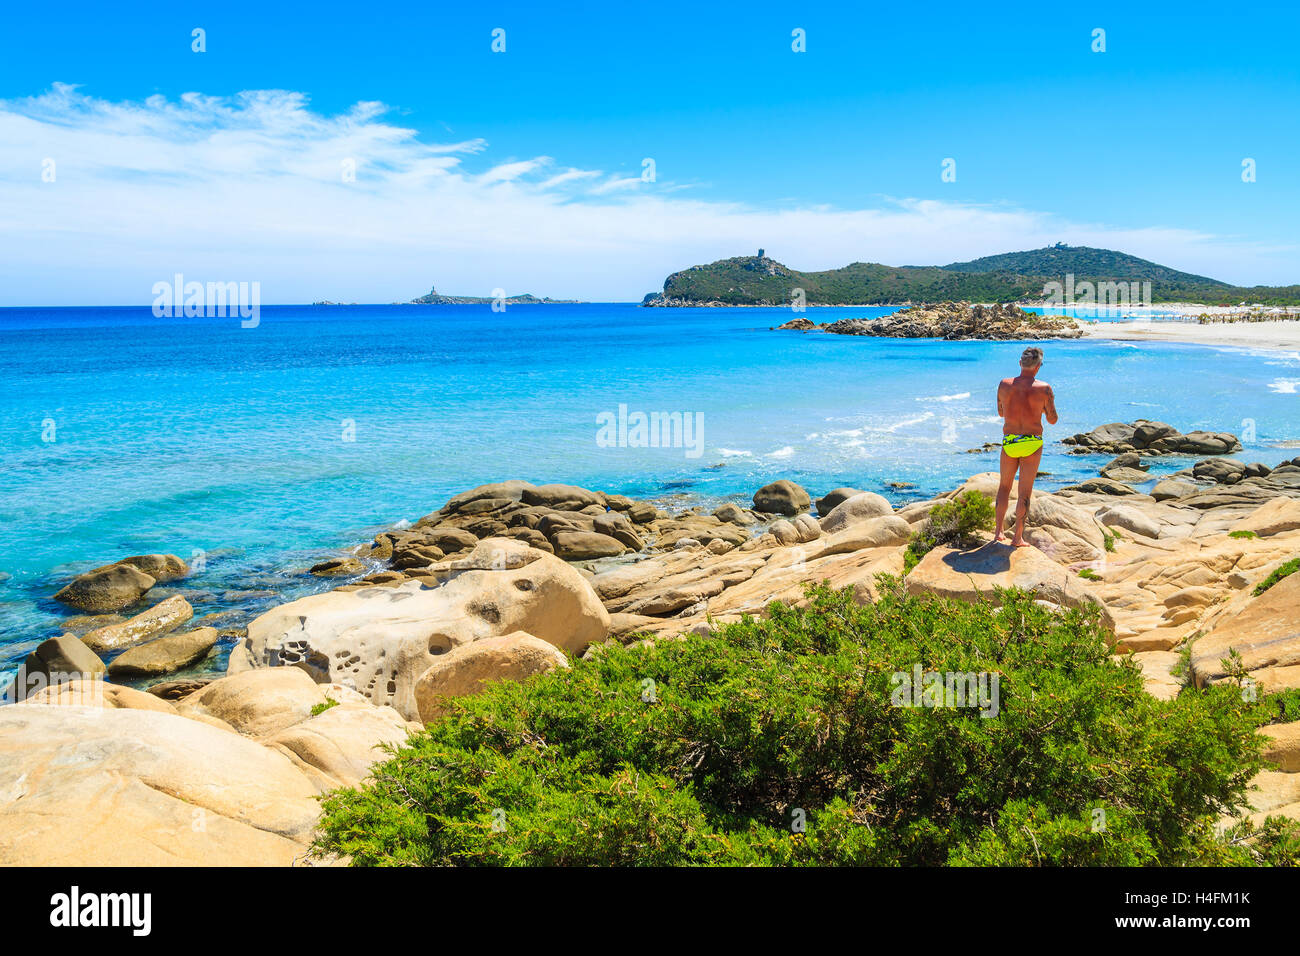 PORTO GIUNCO BAY, SARDINIA ISLAND - MAY 27, 2014: man tourist standing on a rock looking at turquoise sea water on coast of Sardinia island, Villasimius peninsula, Italy. Stock Photo